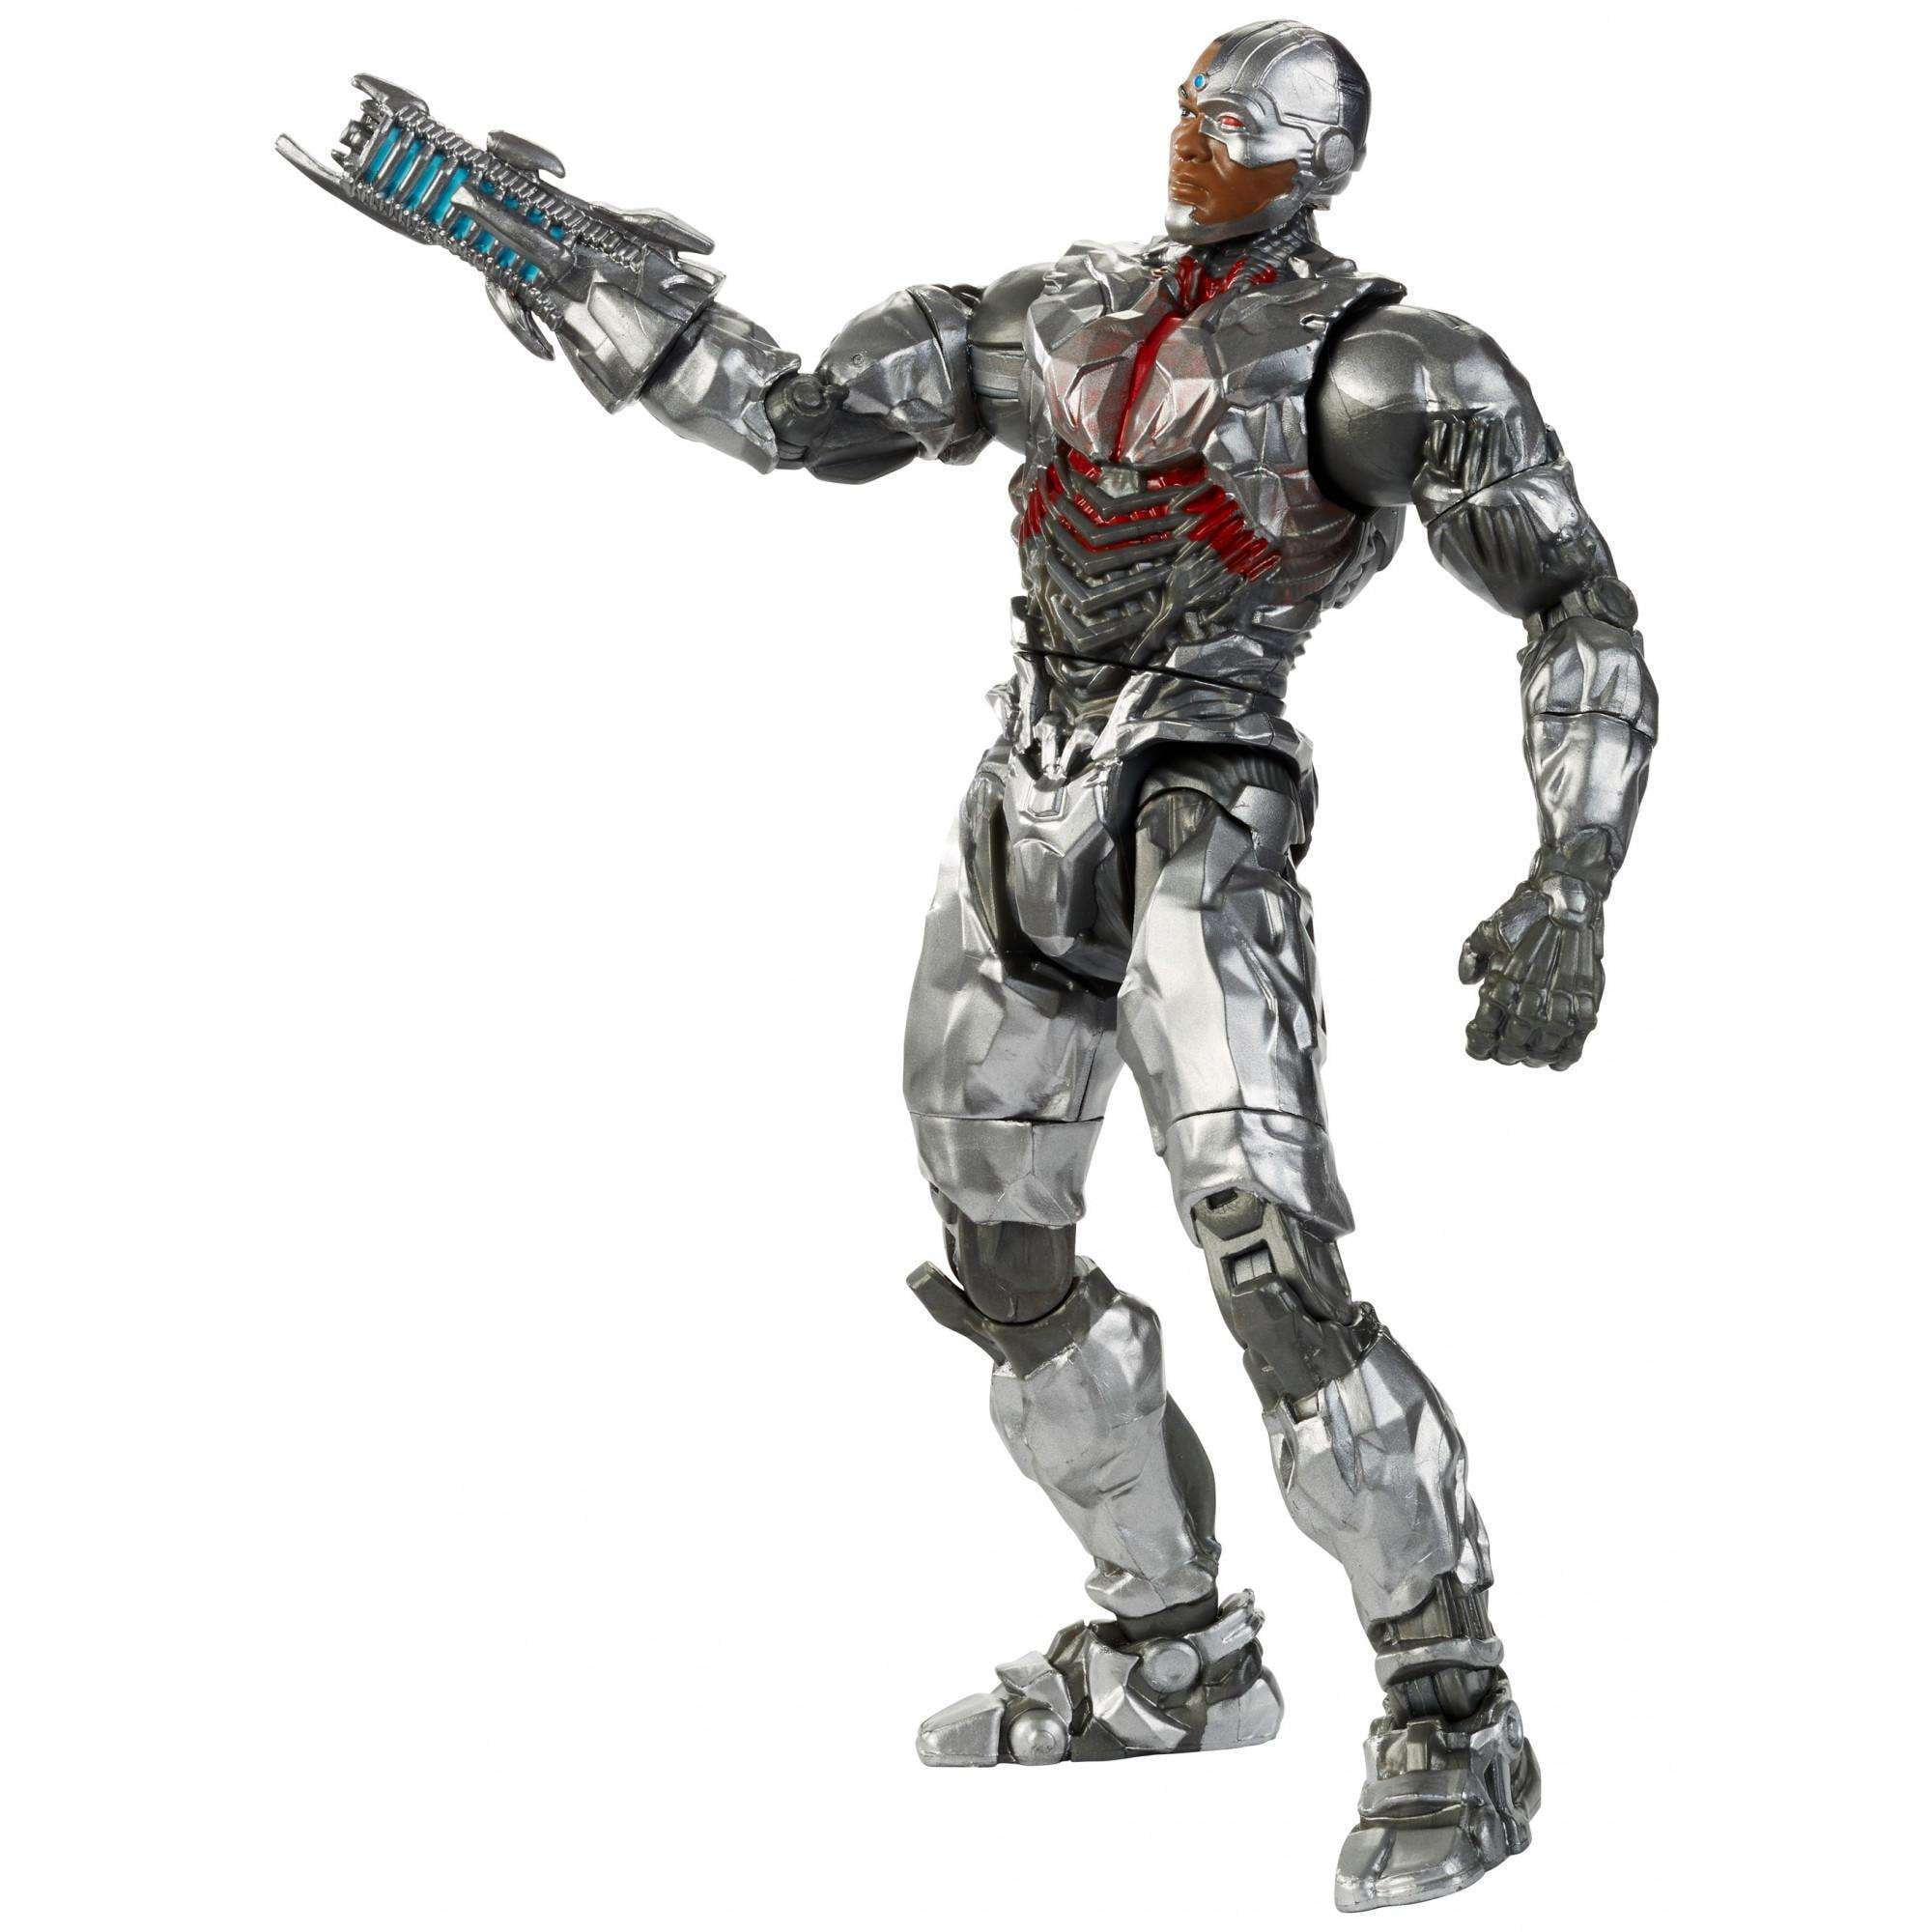 DC Collectibles Justice League Cyborg Action Figure 